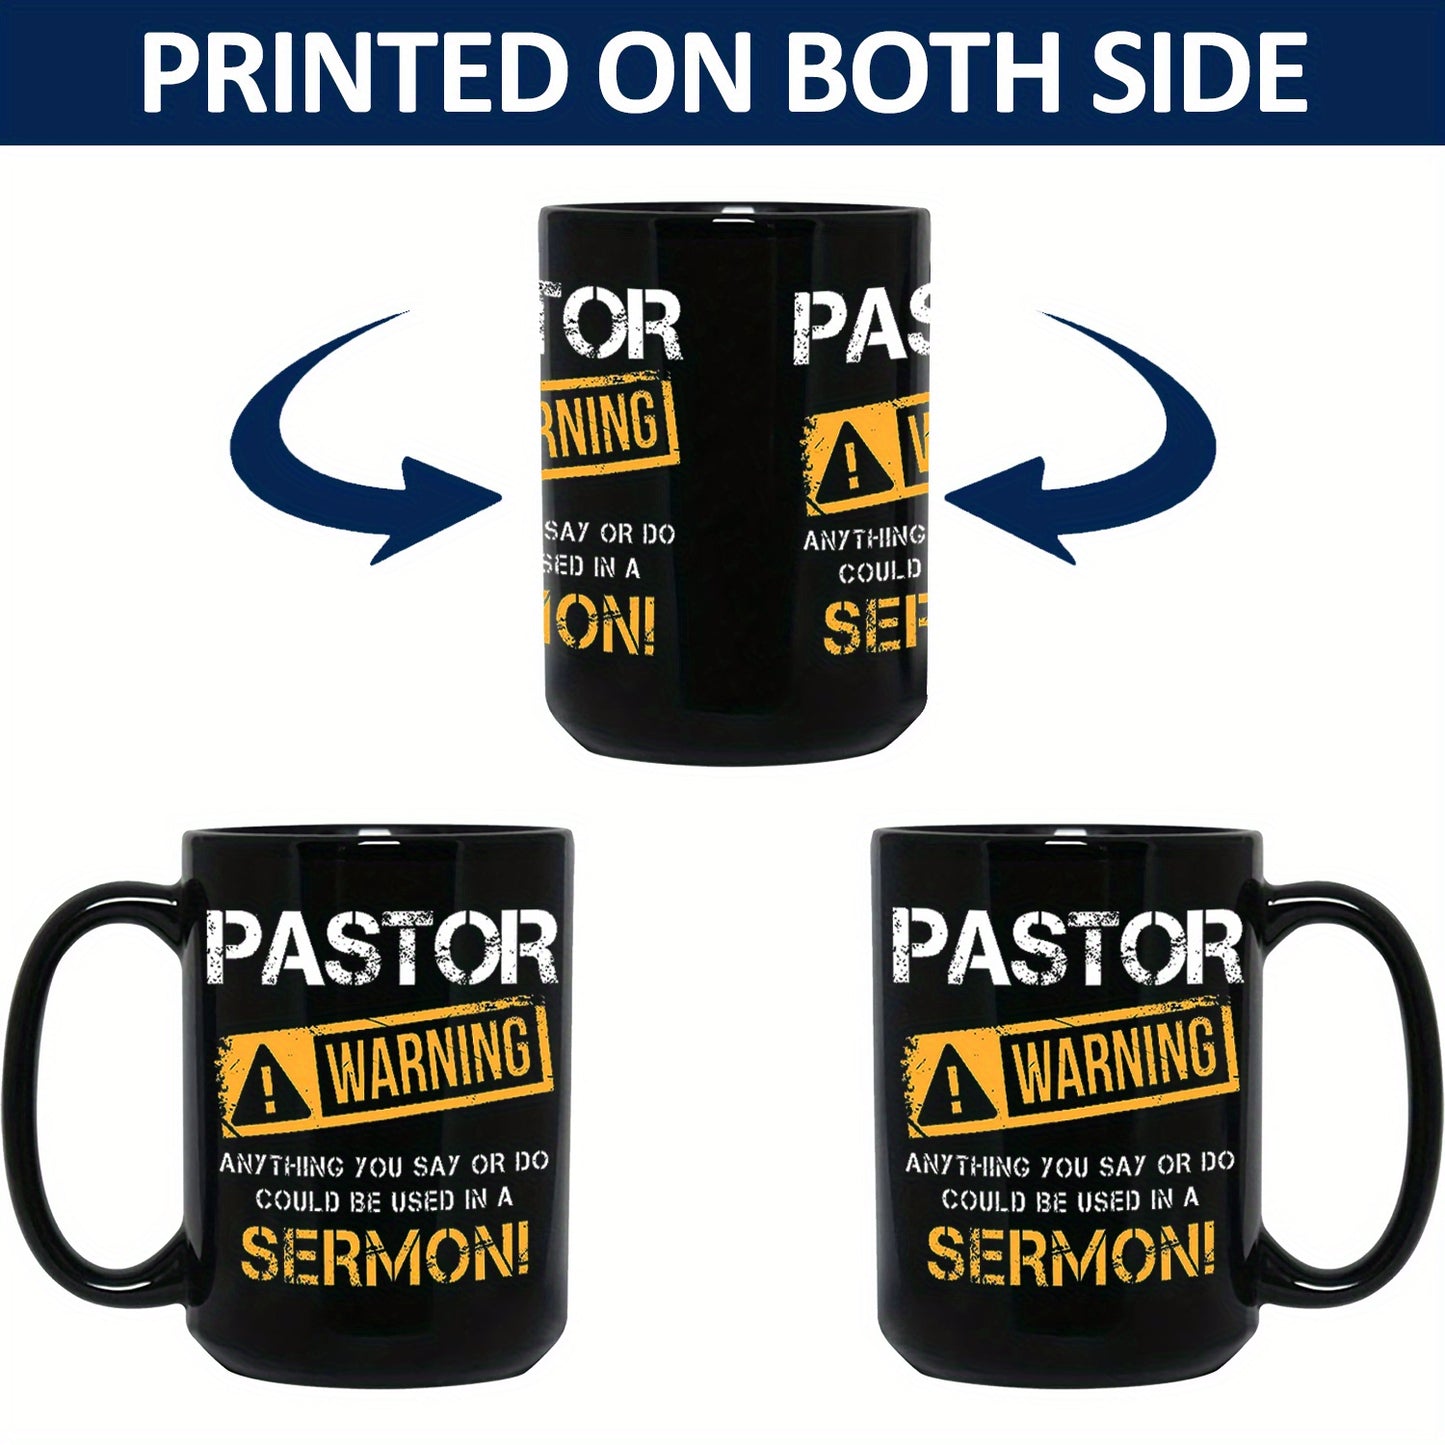 Pastor Warning: You Will Be Used In A Sermon Christian Black Ceramic Mug, 11oz claimedbygoddesigns